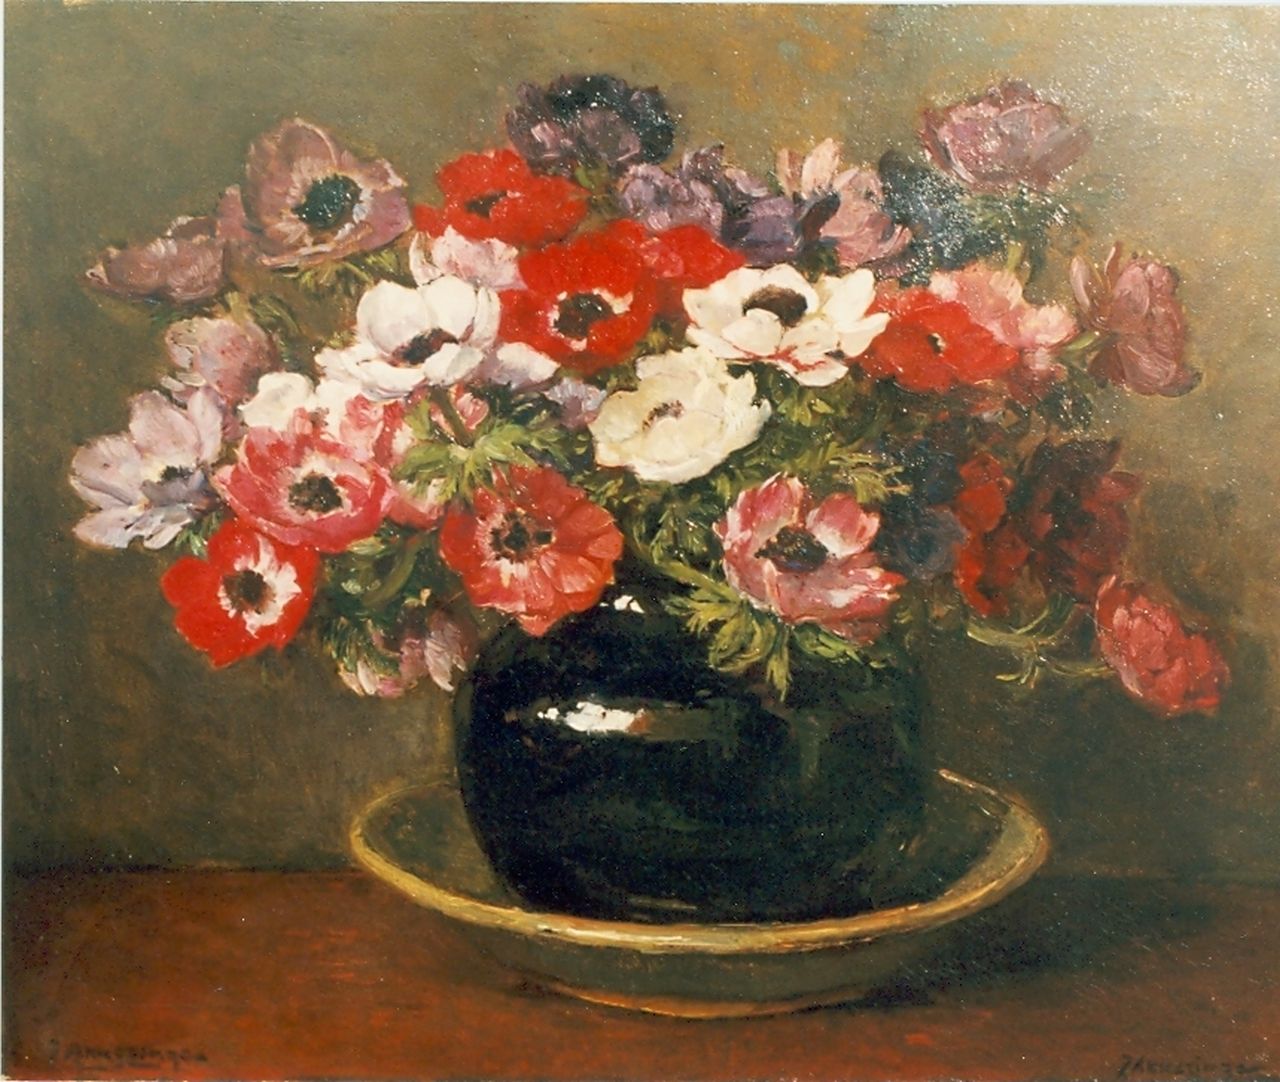 Akkeringa J.E.H.  | 'Johannes Evert' Hendrik Akkeringa, Flowers in a jar, Öl auf Leinwand 41,7 x 51,4 cm, signed l.r.